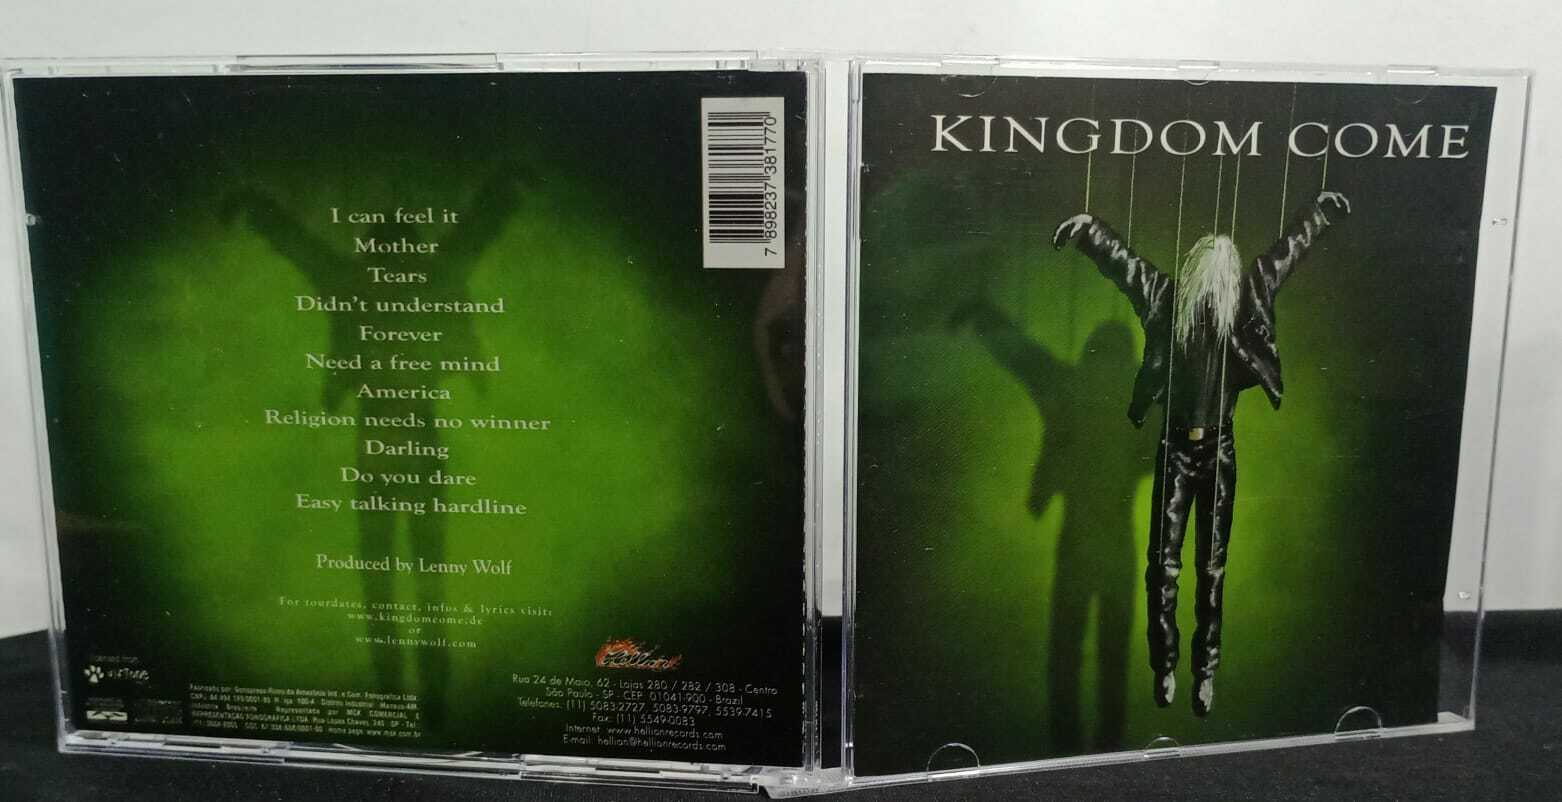 CD - Kingdom Come - Independent